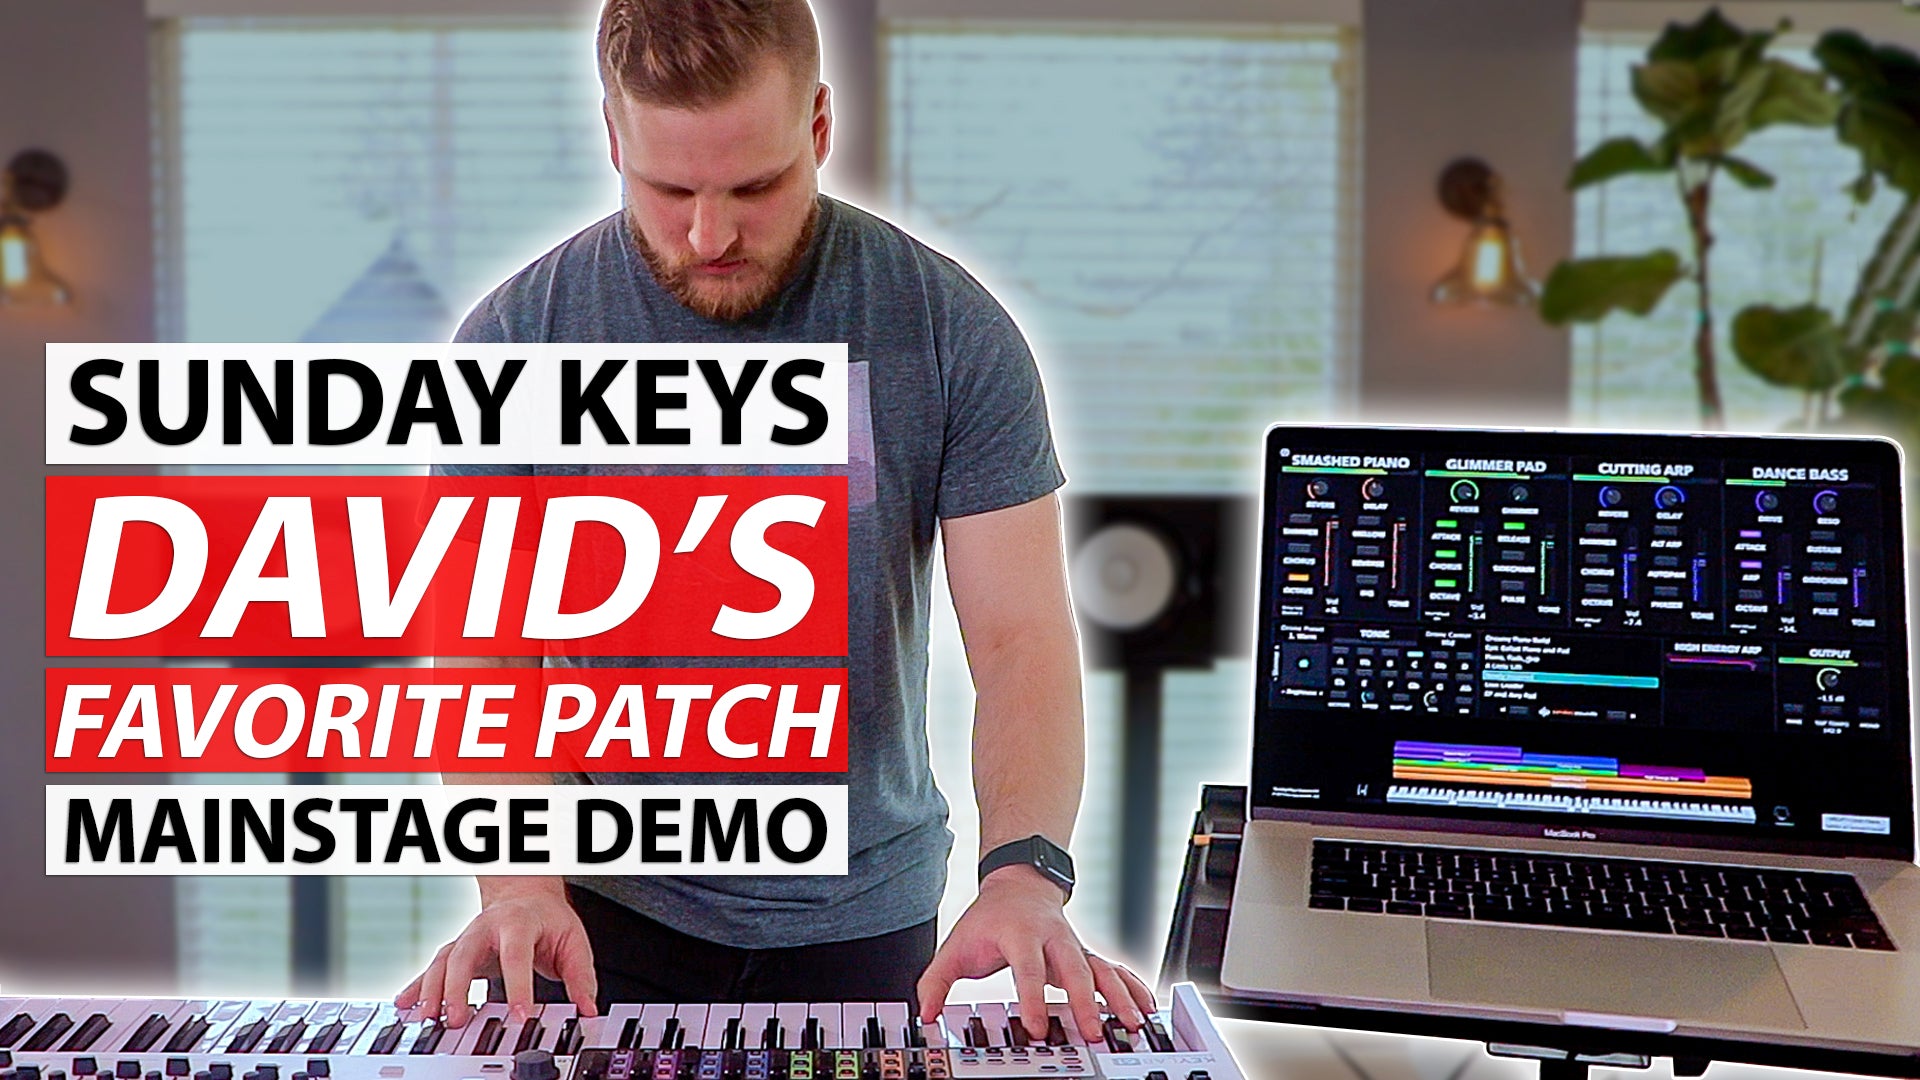 Sunday Keys MainStage Template Demo - David's Favorite Patch!